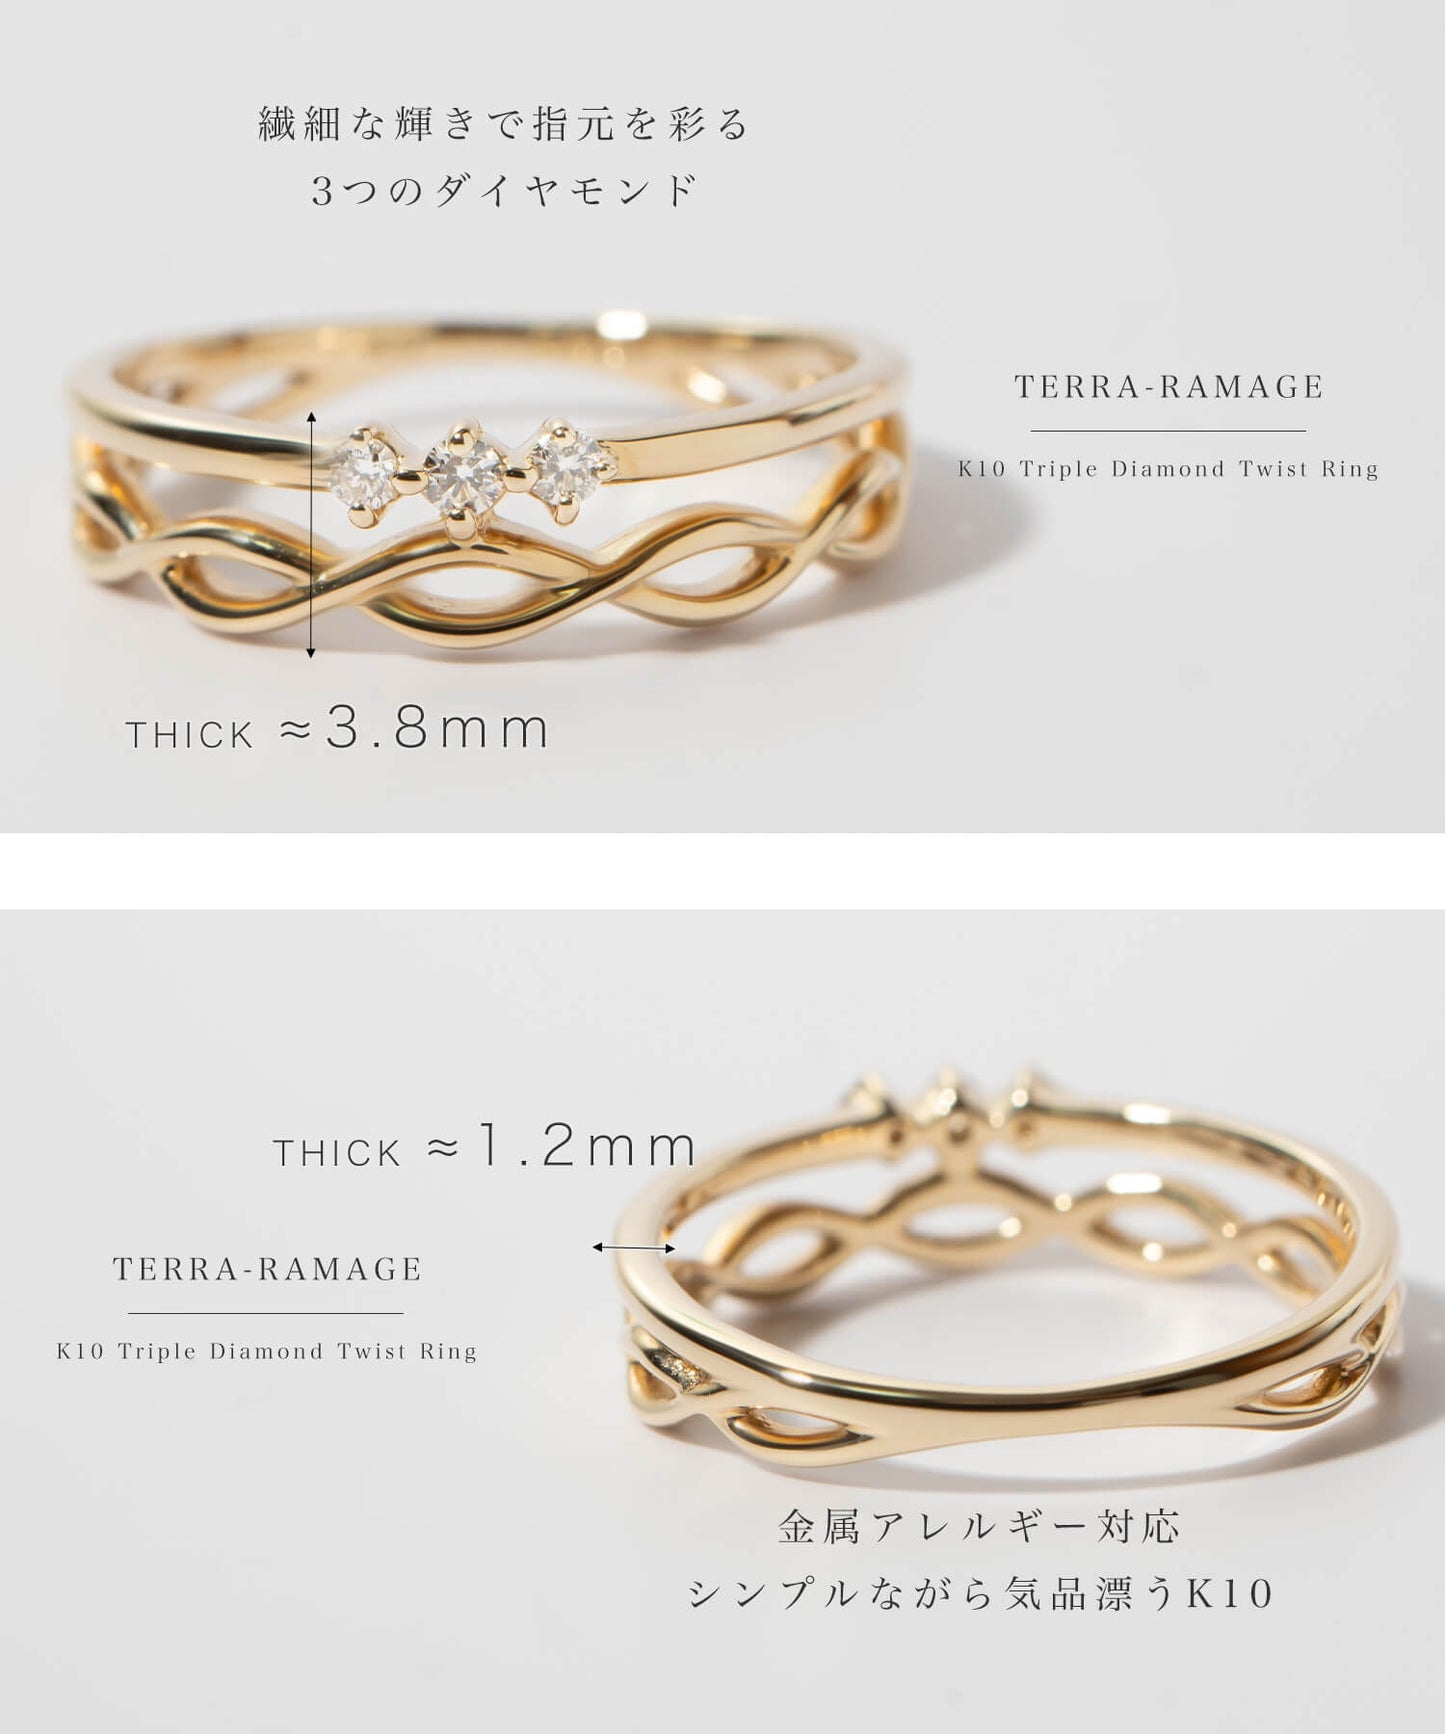 K10 Triple Diamond Twist Ring | TERRA RAMAGE RING